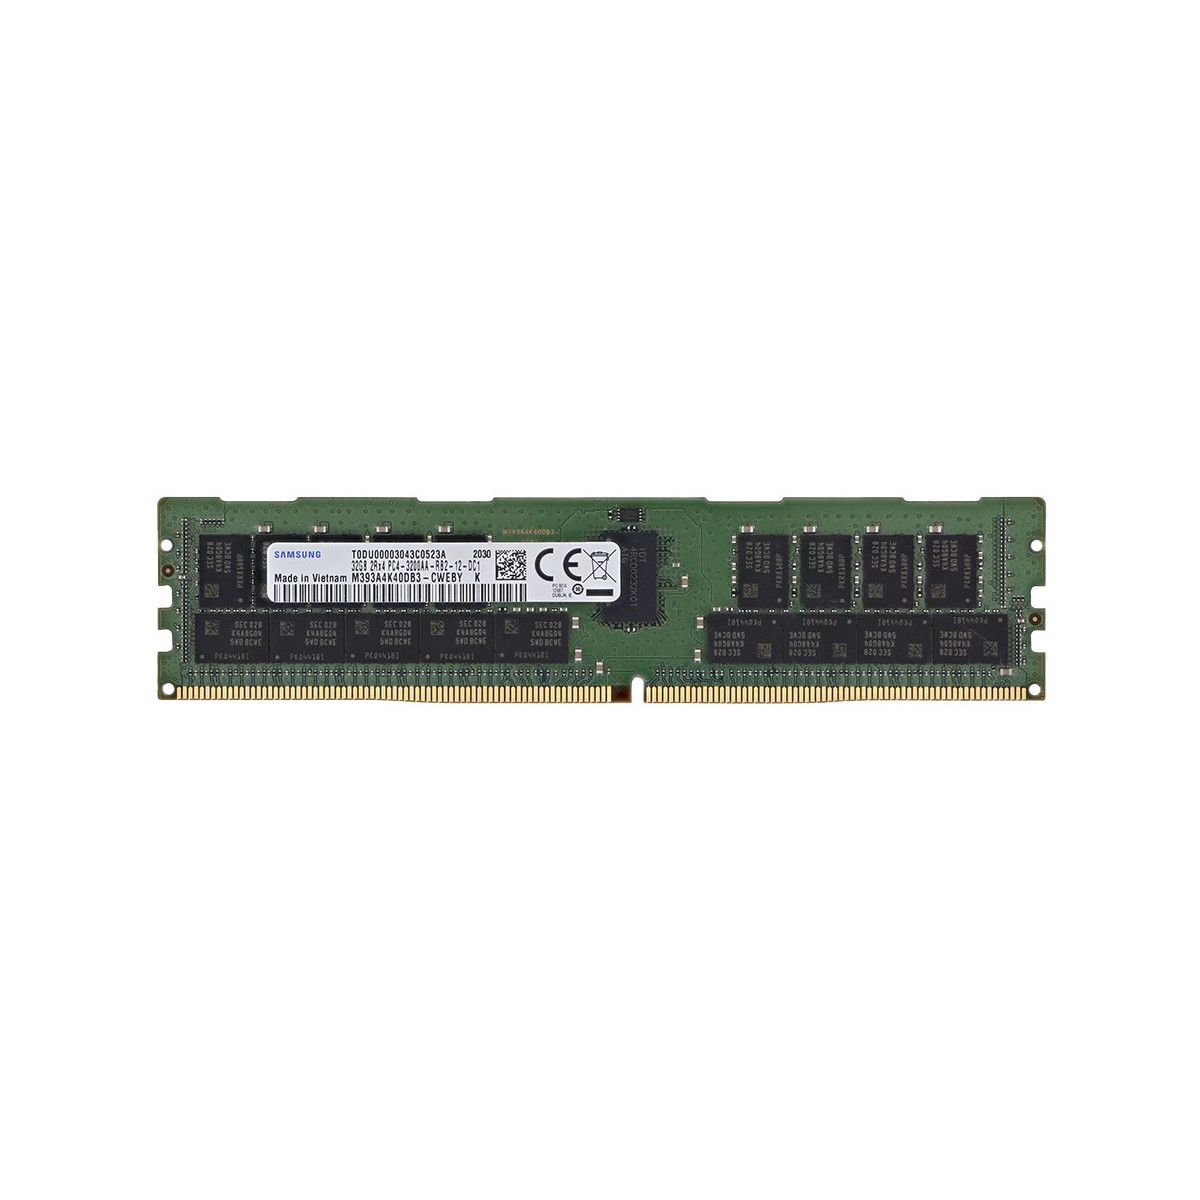 UCS-MR-X32G2RW-MS - Memstar 1x 32GB DDR4-3200 RDIMM PC4-25600R - OEM compatible con Mem-Star Memoria 1 - Memstar 